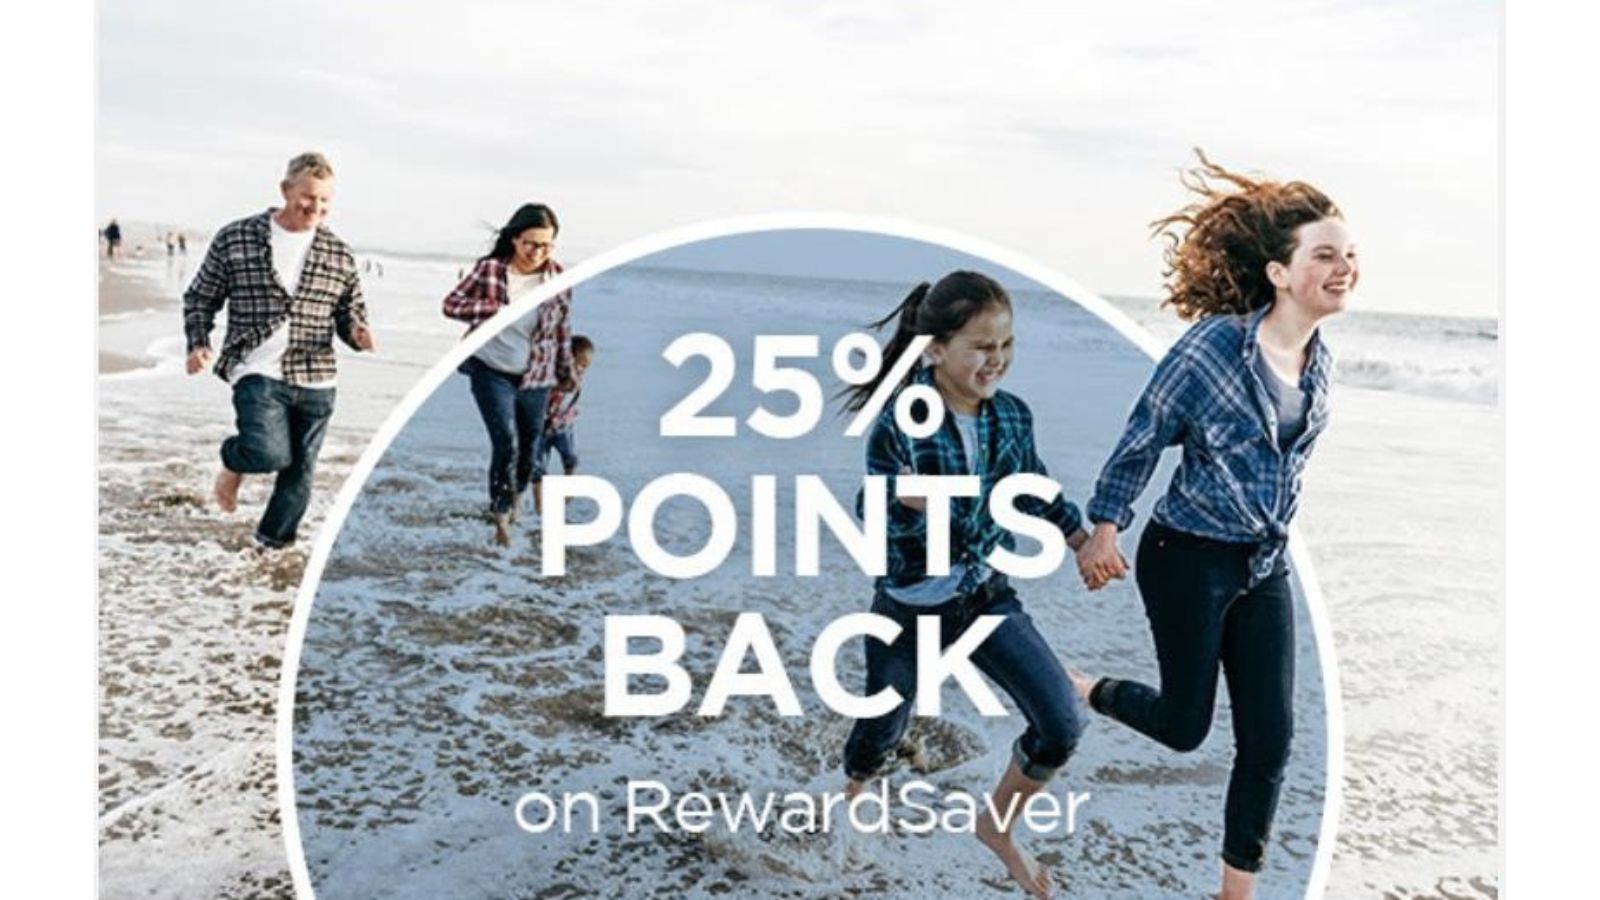 Radisson Rewards Americas: Get 25% Back On RewardSaver Redemptions